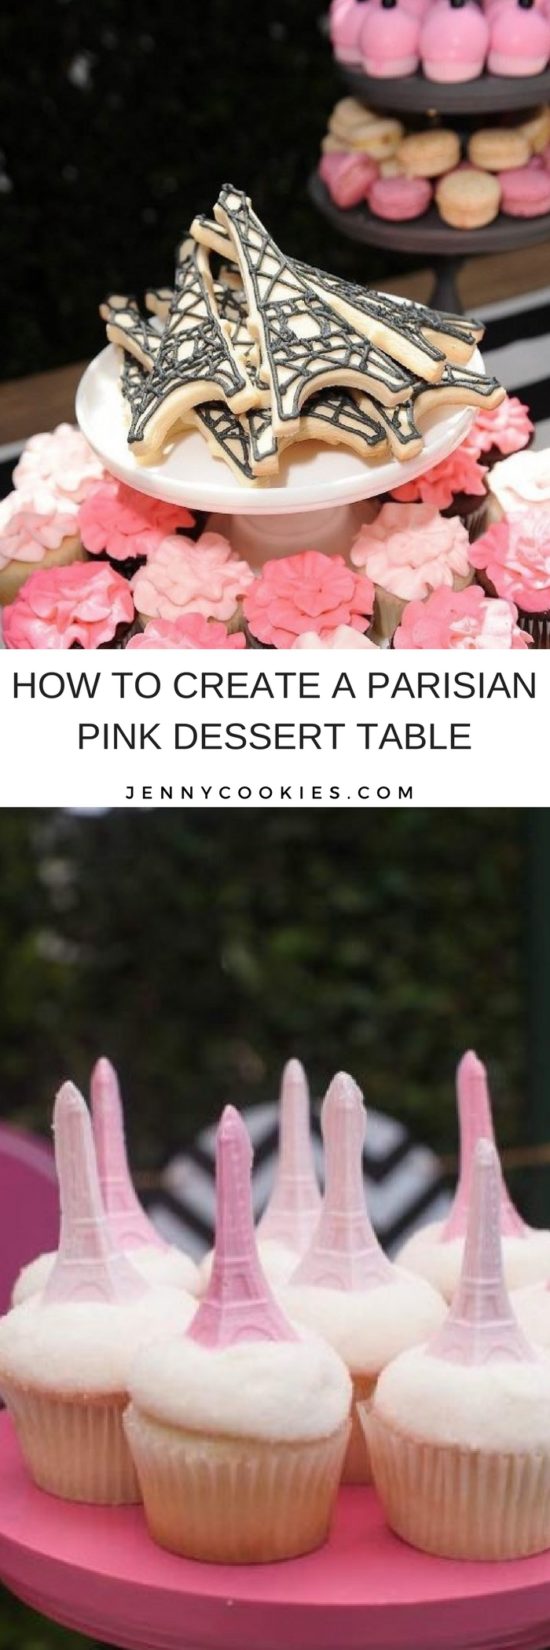 Parisian Pink Dessert Table | Paris themed dessert table | Parisian birthday party ideas | Paris themed birthday party | dessert table ideas | pink dessert table ideas || JennyCookies.com #parisian #paristhemedparty #desserttables